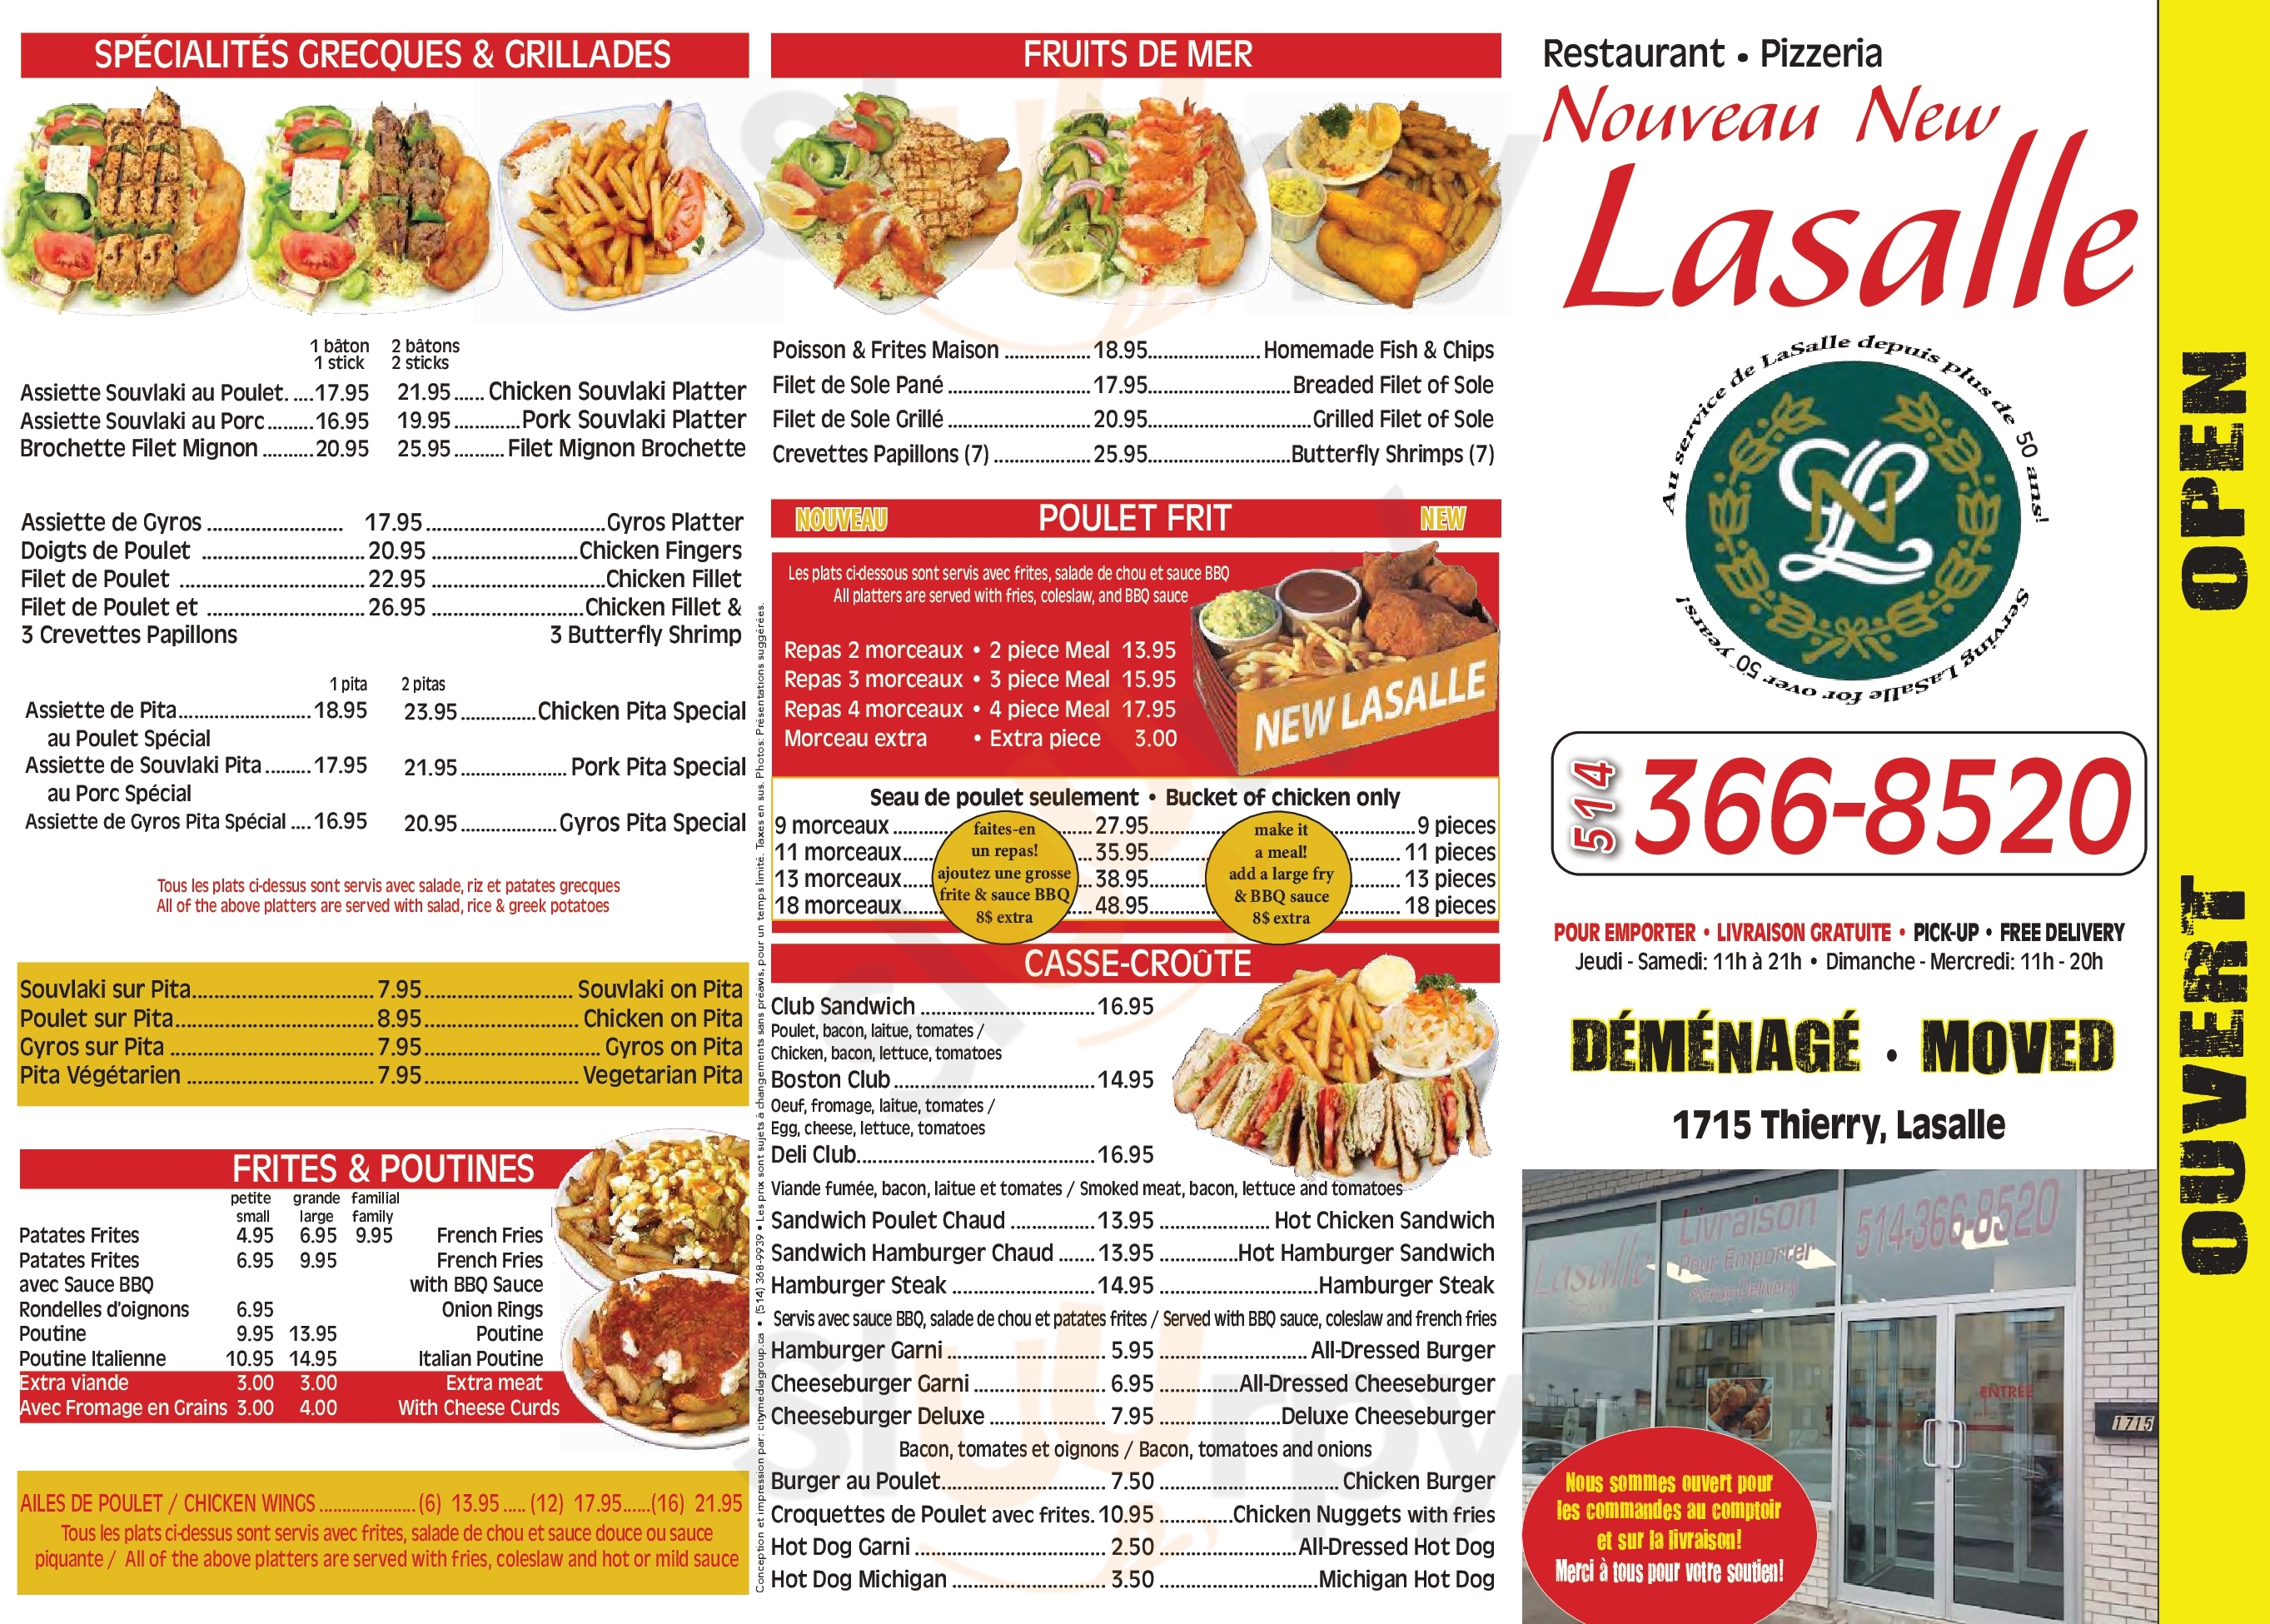 New Lasalle Restaurant Pizzeria Montreal Menu - 1